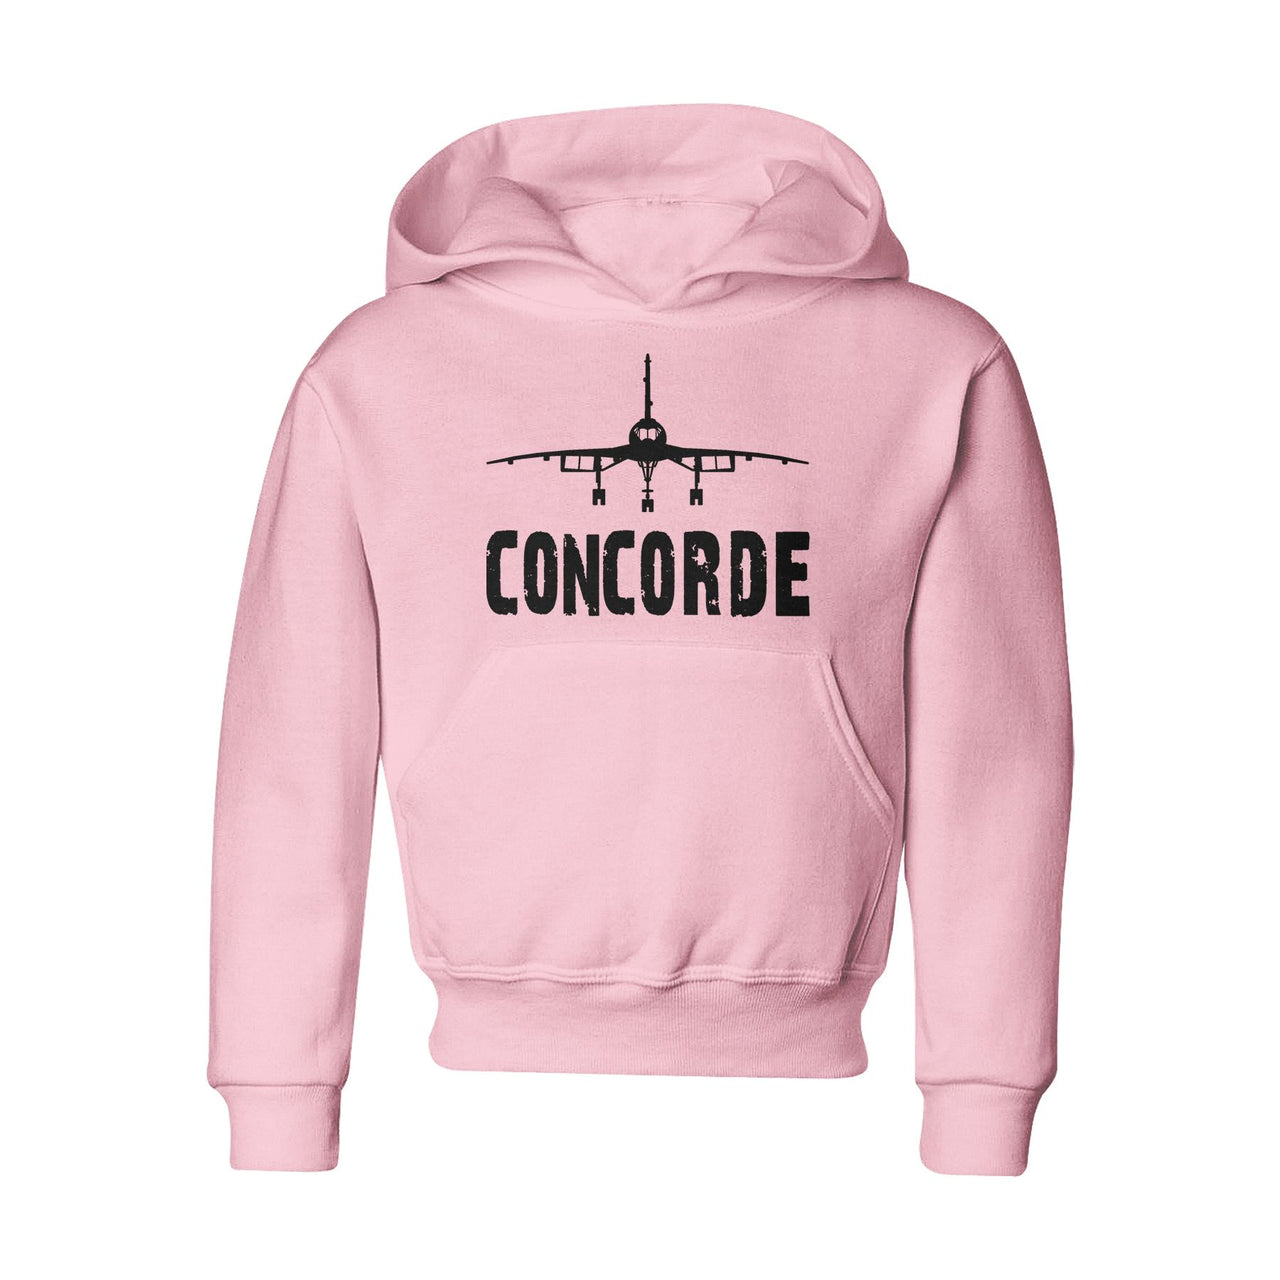 Concorde & Plane Designed "CHILDREN" Hoodies